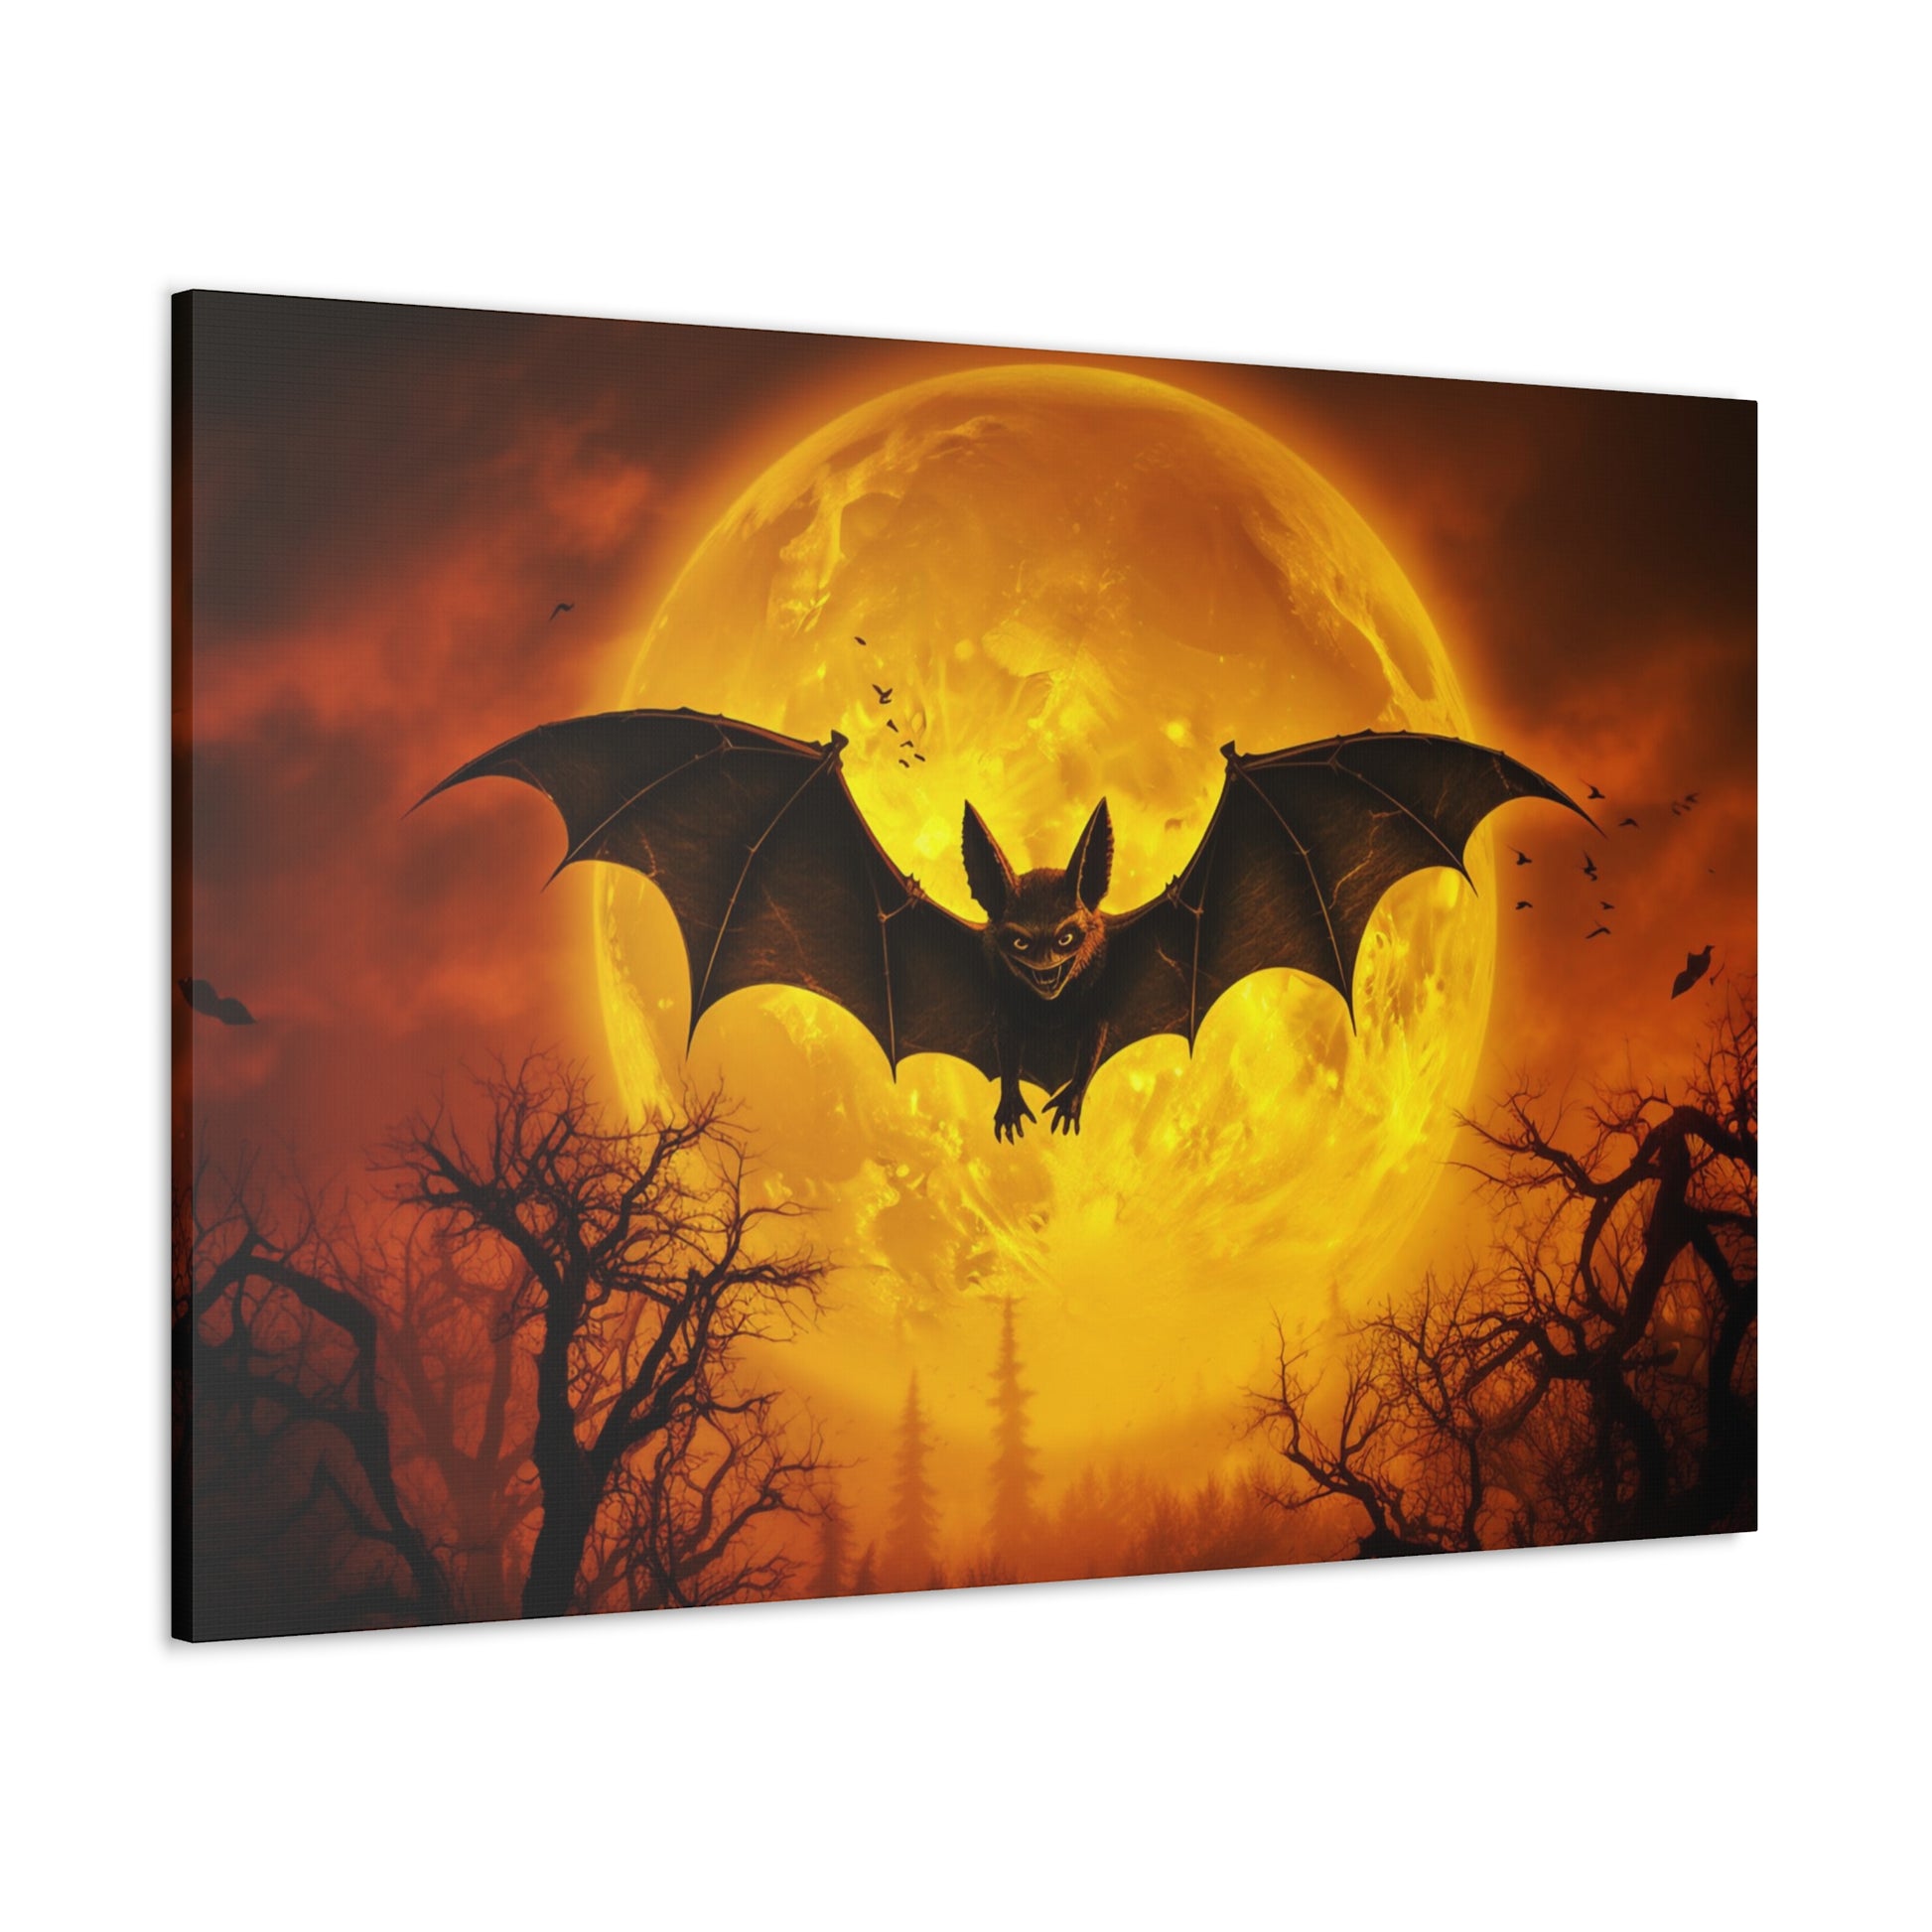 halloween bat wall decor ideas, bat flying in front of yellow moon canvas print